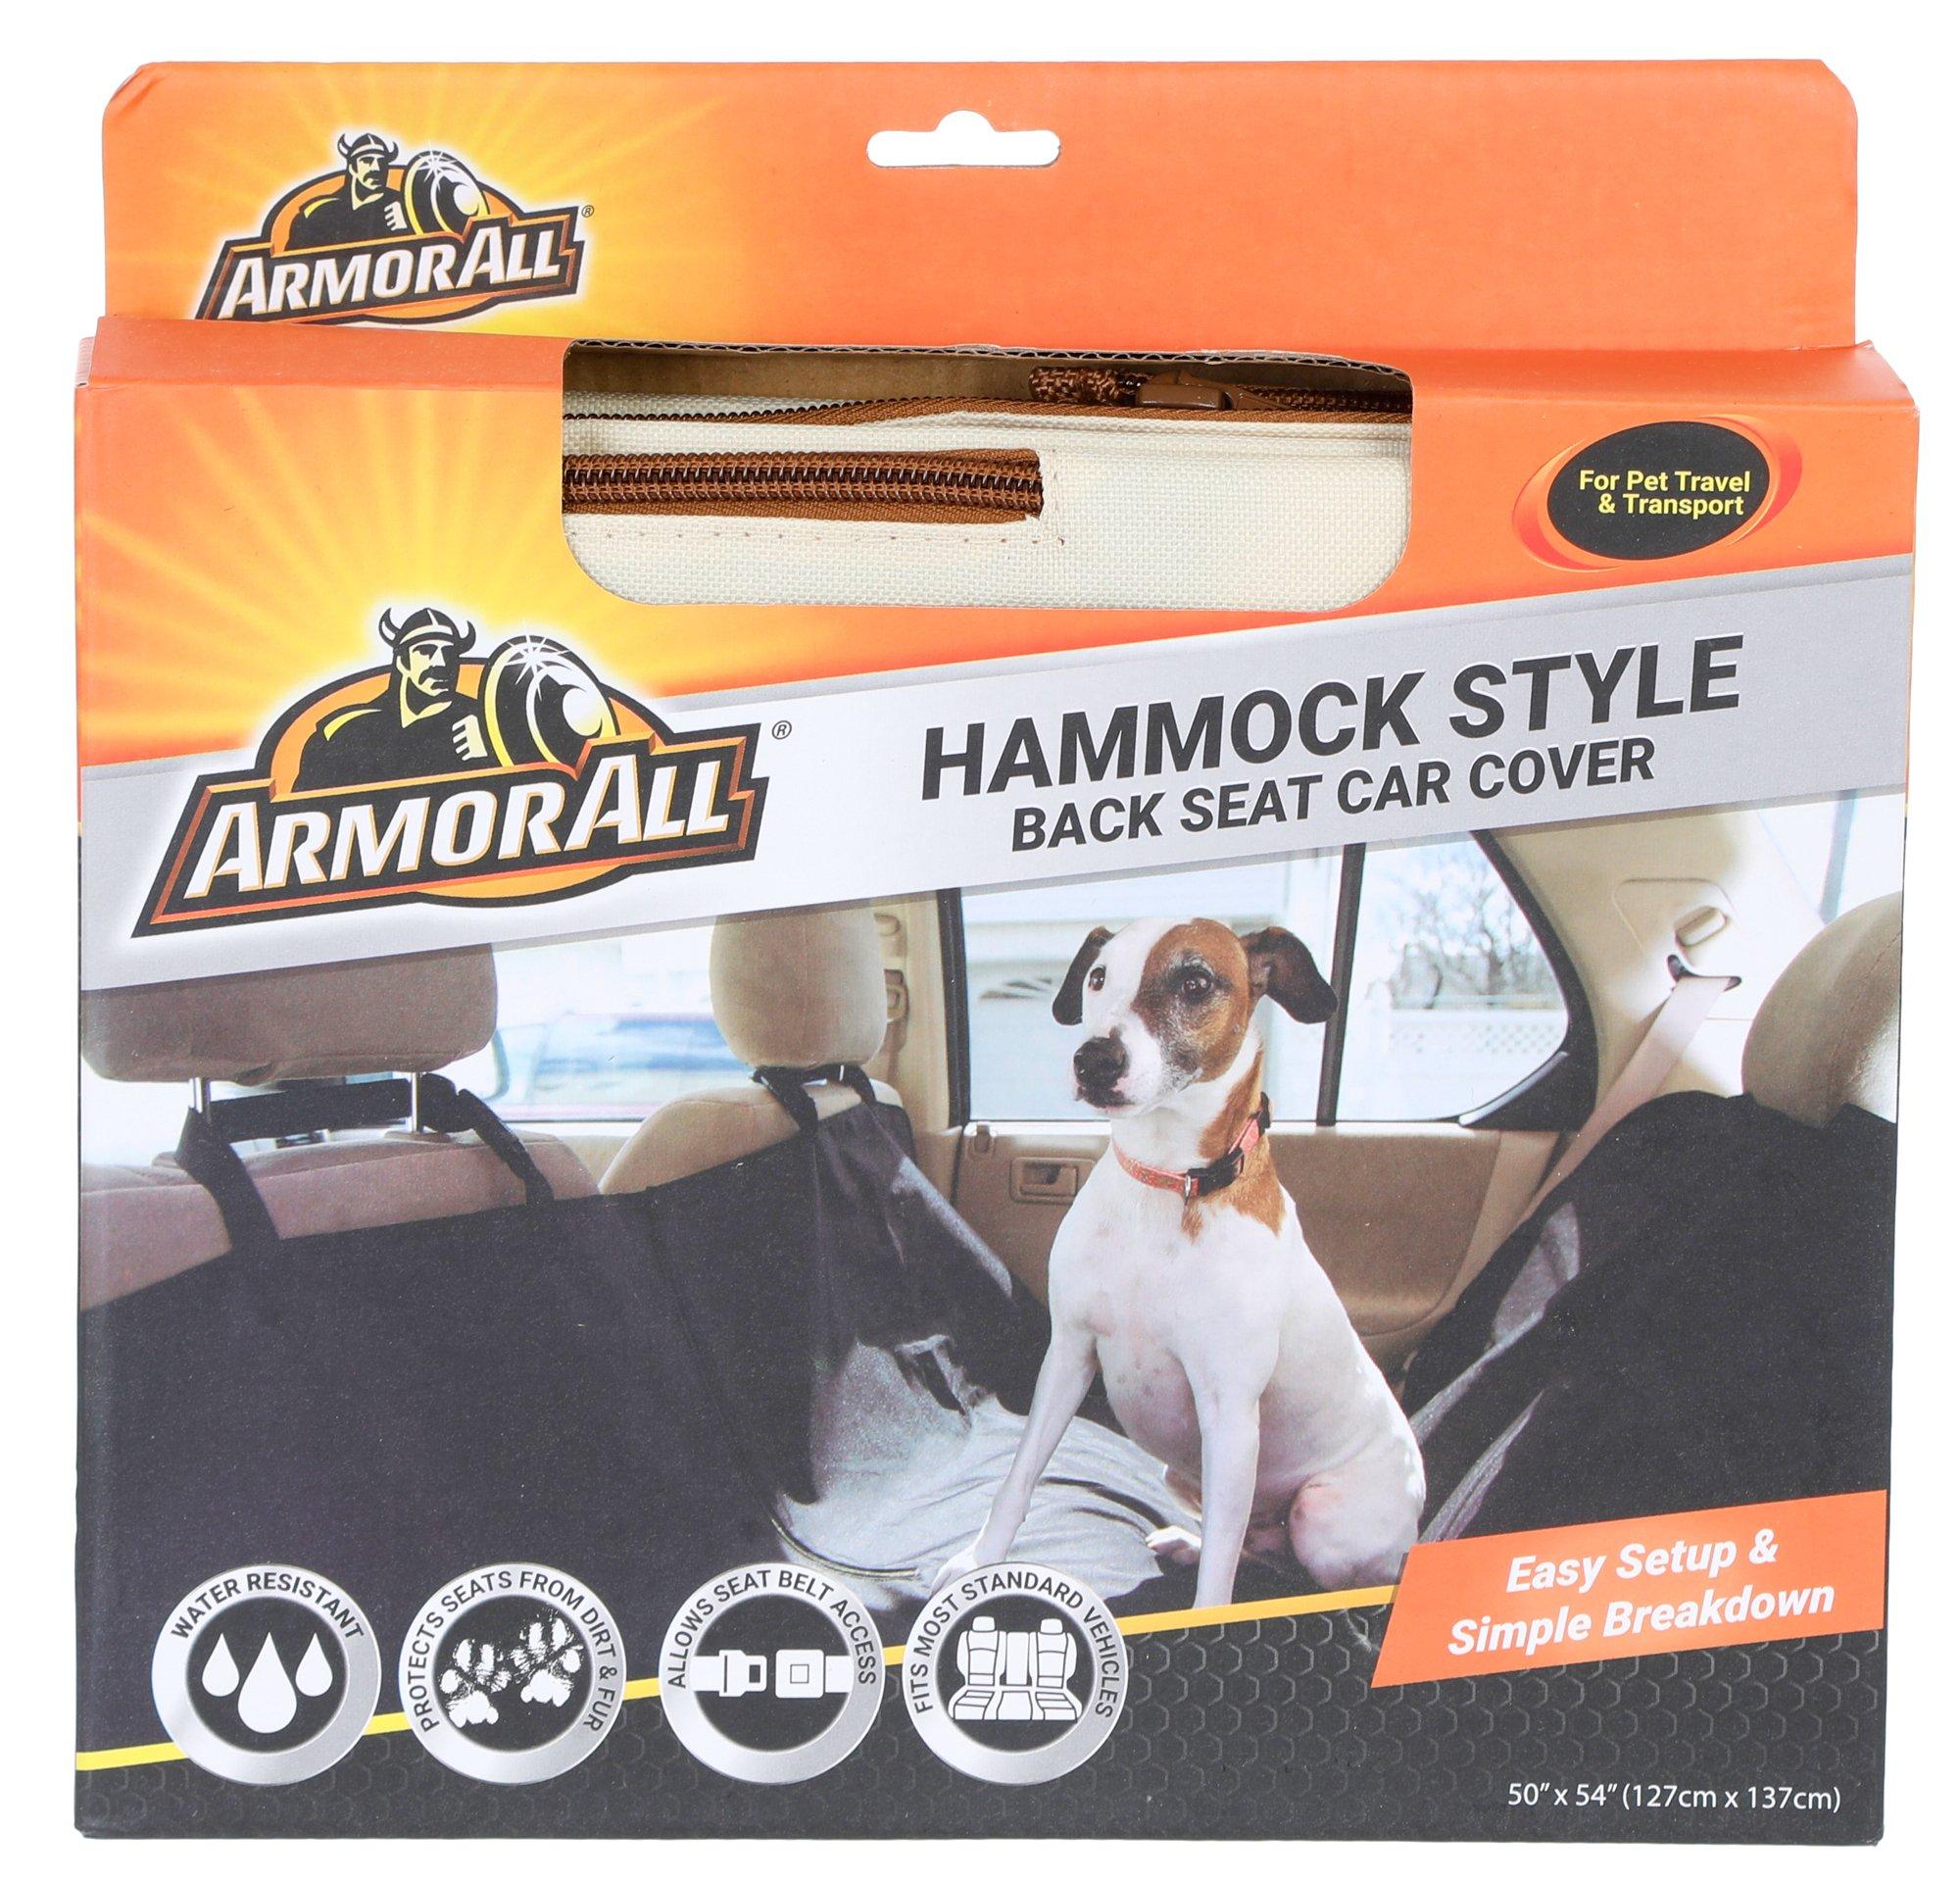 Hammock Back Seat Car Cover